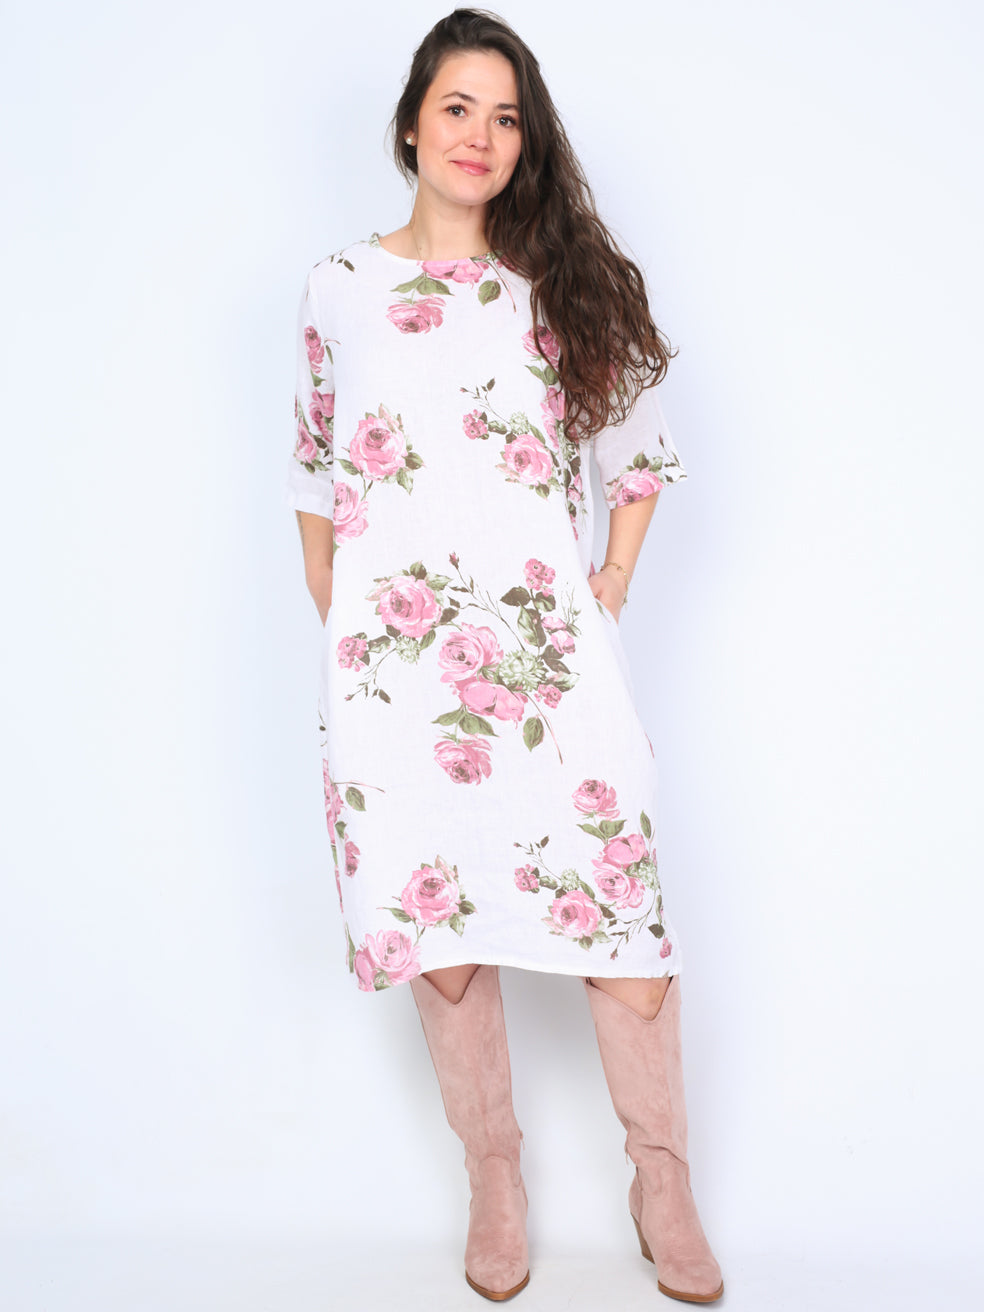 Krone 1 linen dress with flower print